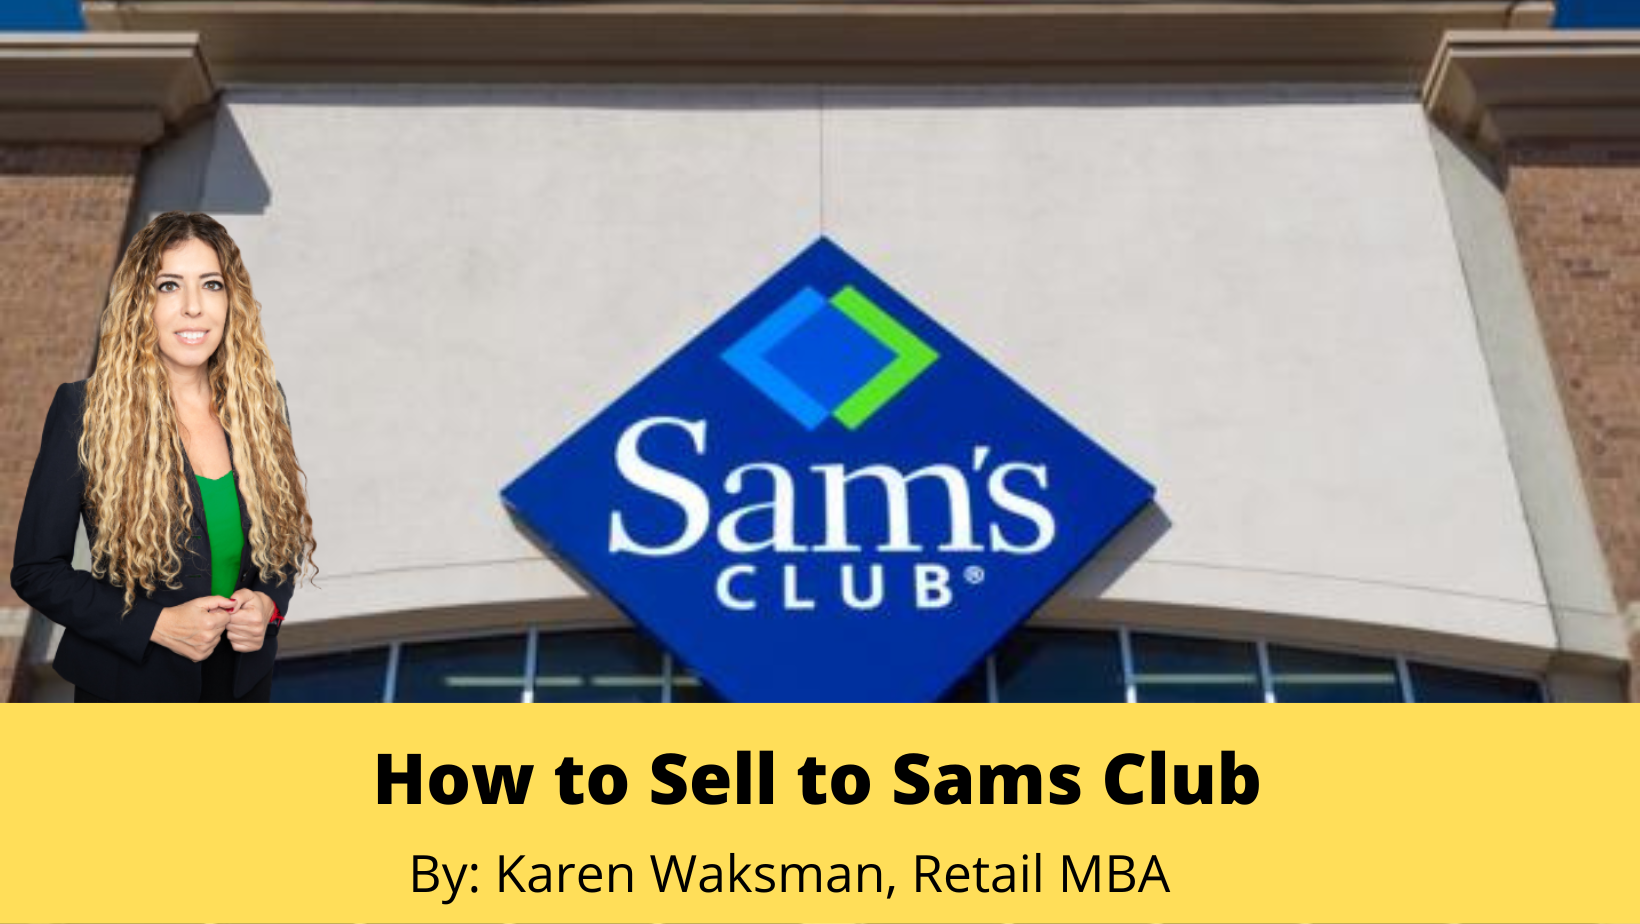 Sell to Sams Club and Become a Sams Club Vendor